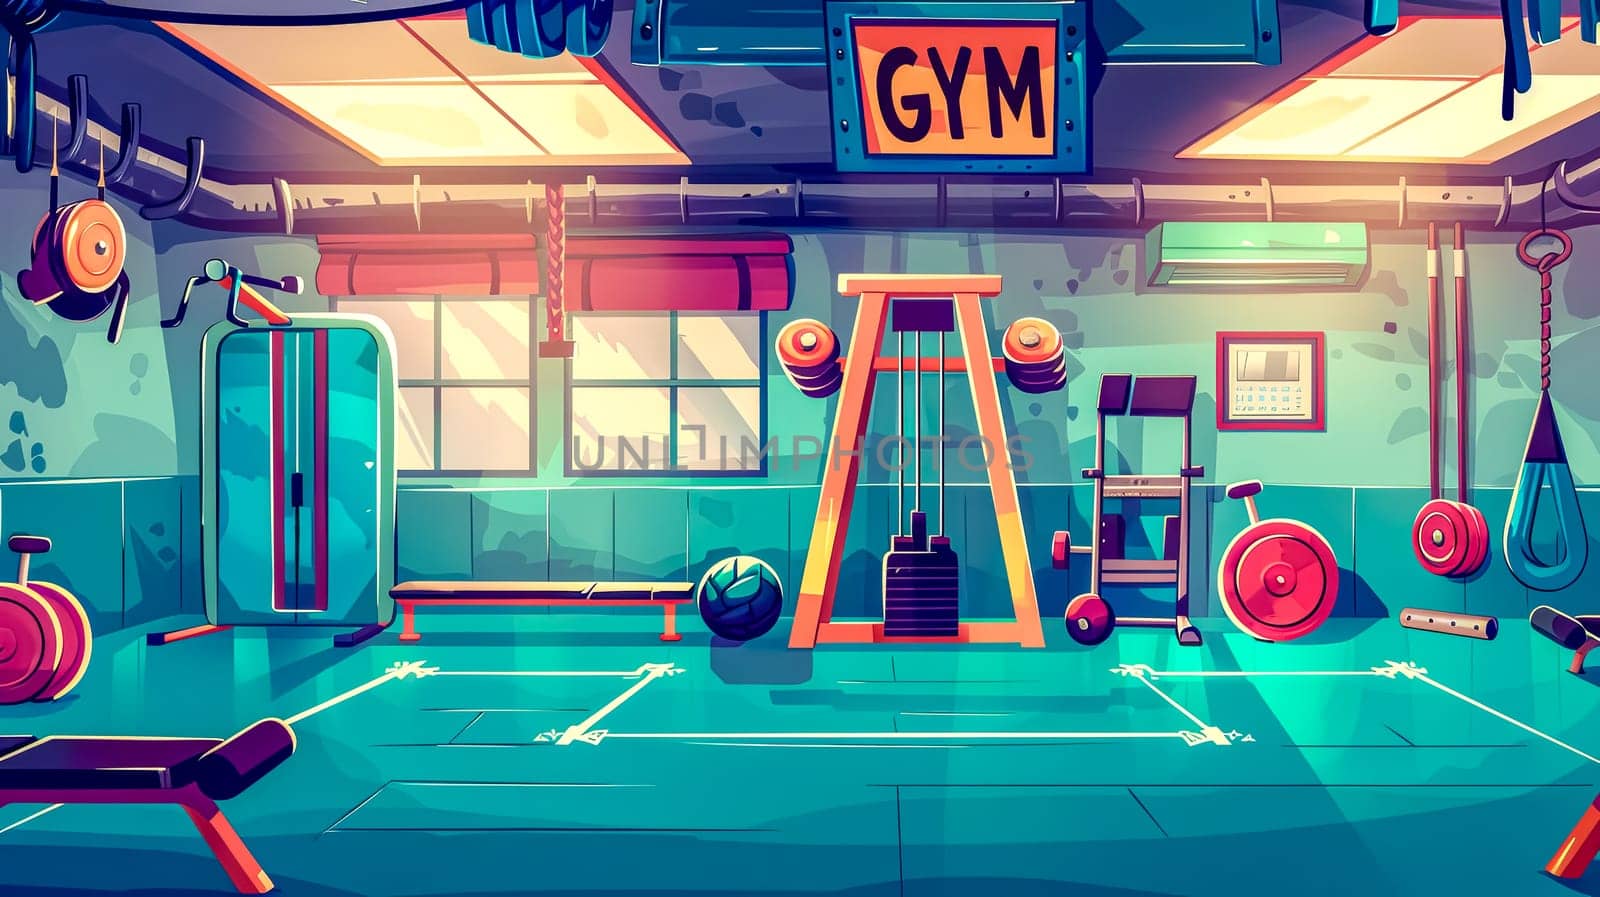 Retro style gym interior illustration by Edophoto